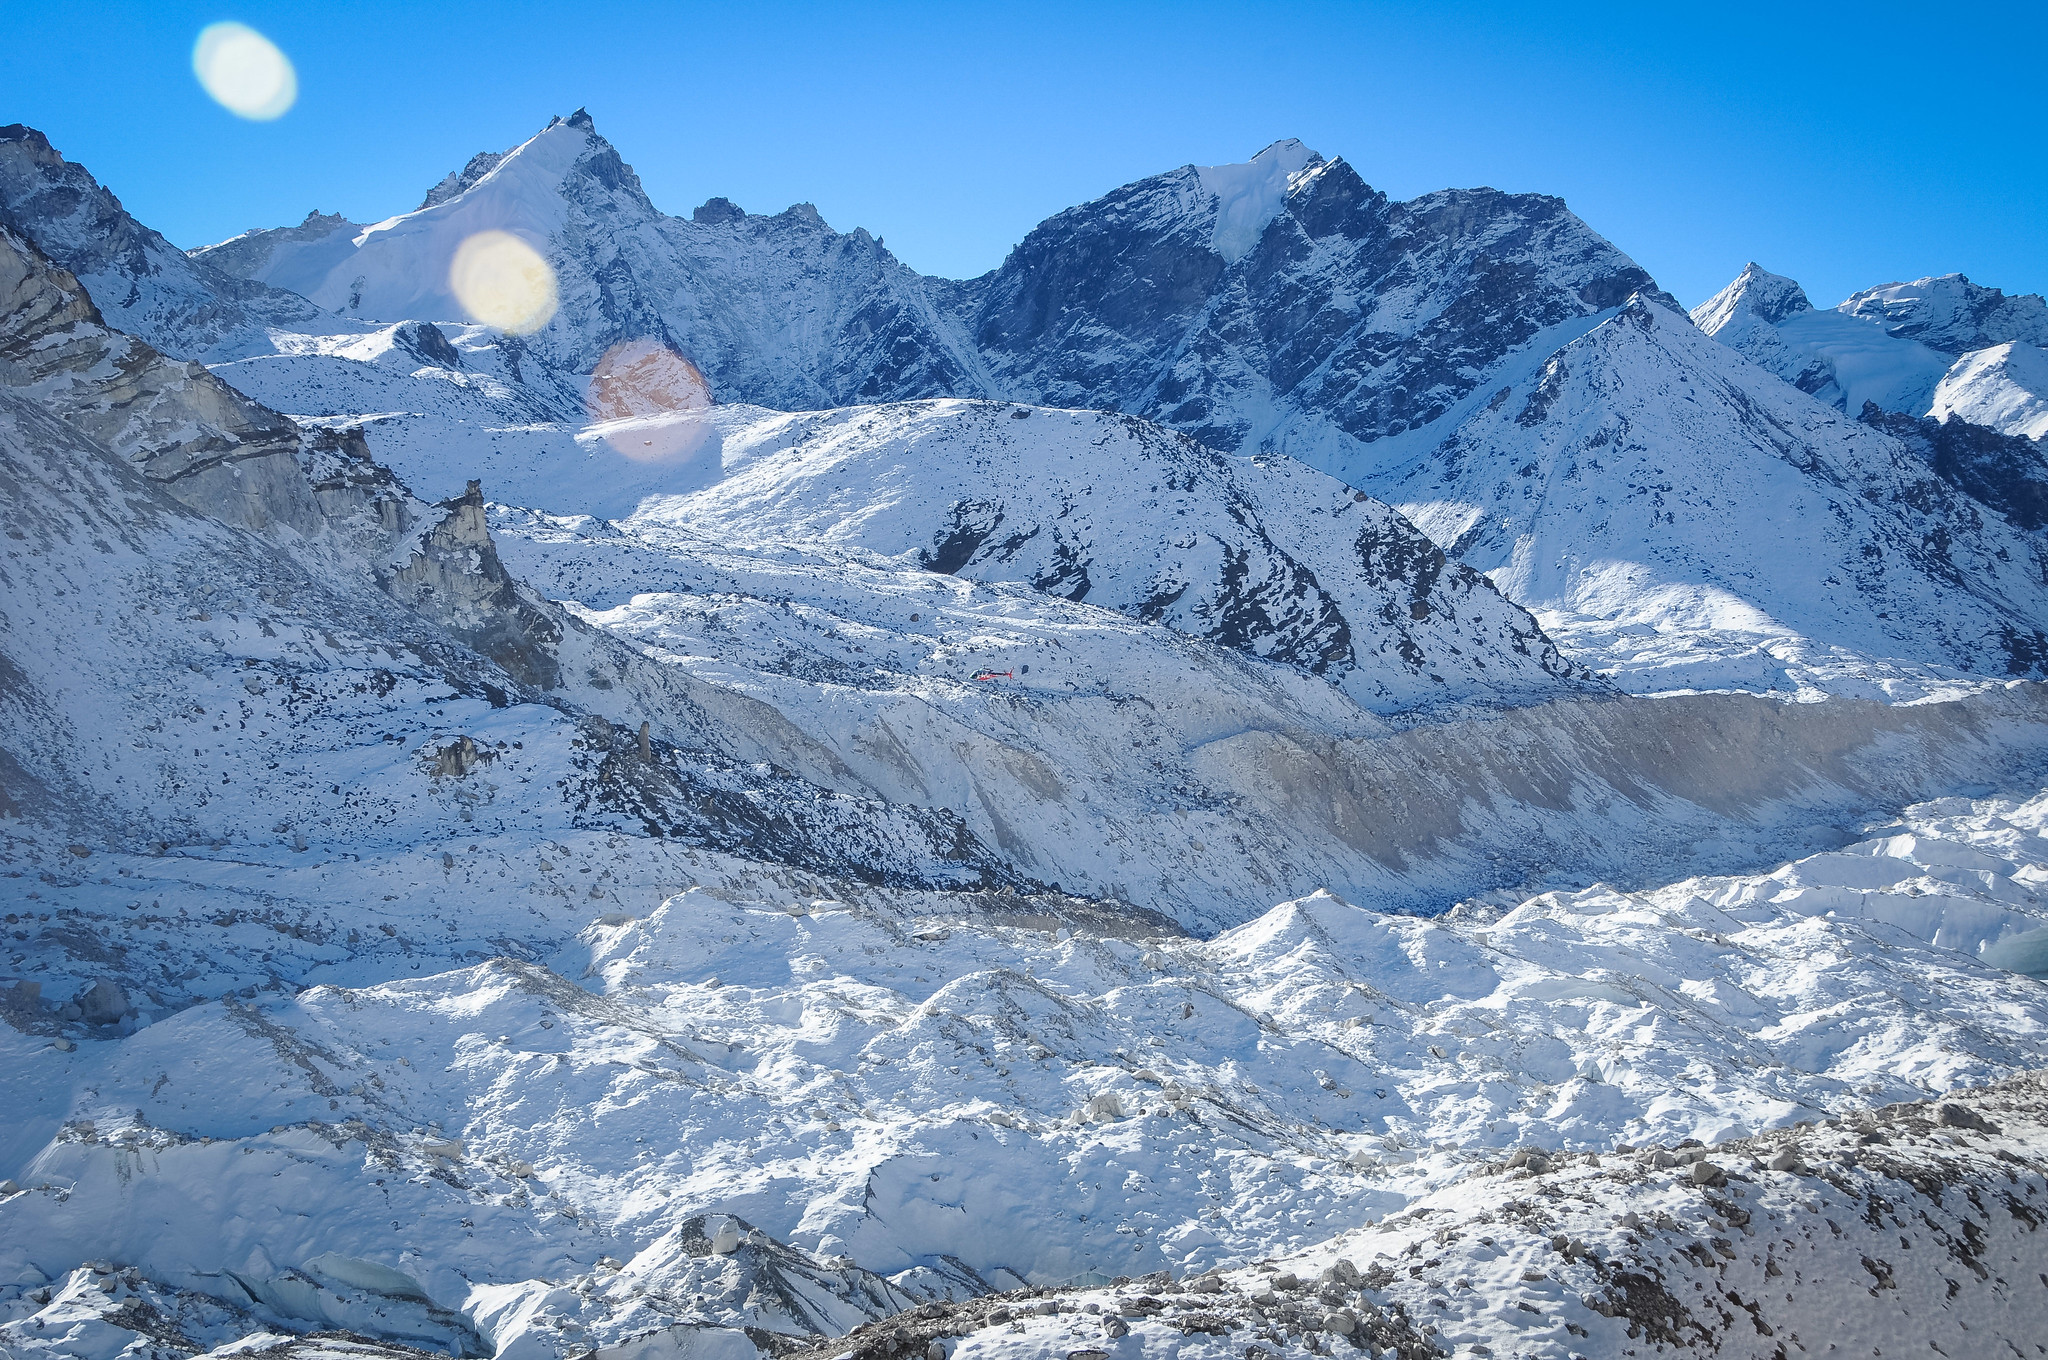 Een foto van de Khumbu Gletsjer, die naast Mount Everest ligt. Foto van Ben & Gab https://www.flickr.com/photos/benandgab/30410180108/in/photolist-Lf5Kj-oNQRfE-KYKam-pKLB2W-DaWWry-pKLAB7-V2H3UQ-bv5ZDf-WE7r2X-KYLhd-ie8tp6-k1Ydy-k5geu-k5gex-Nkf859-k5d2C-W7611j-Vzk41j-Vzk4pL-Wav9oz-UTbBqS-LGL57p-bDzgWs-bStZtn-7nuqEJ-KYUmn-2asCvdr-KYV5D-k5gew-7nqwk2-oxuaz-oxvrX-NLGns-CfLamQ-7nurUA-CDJJWr-7KT1zV-7pYDNT/ 